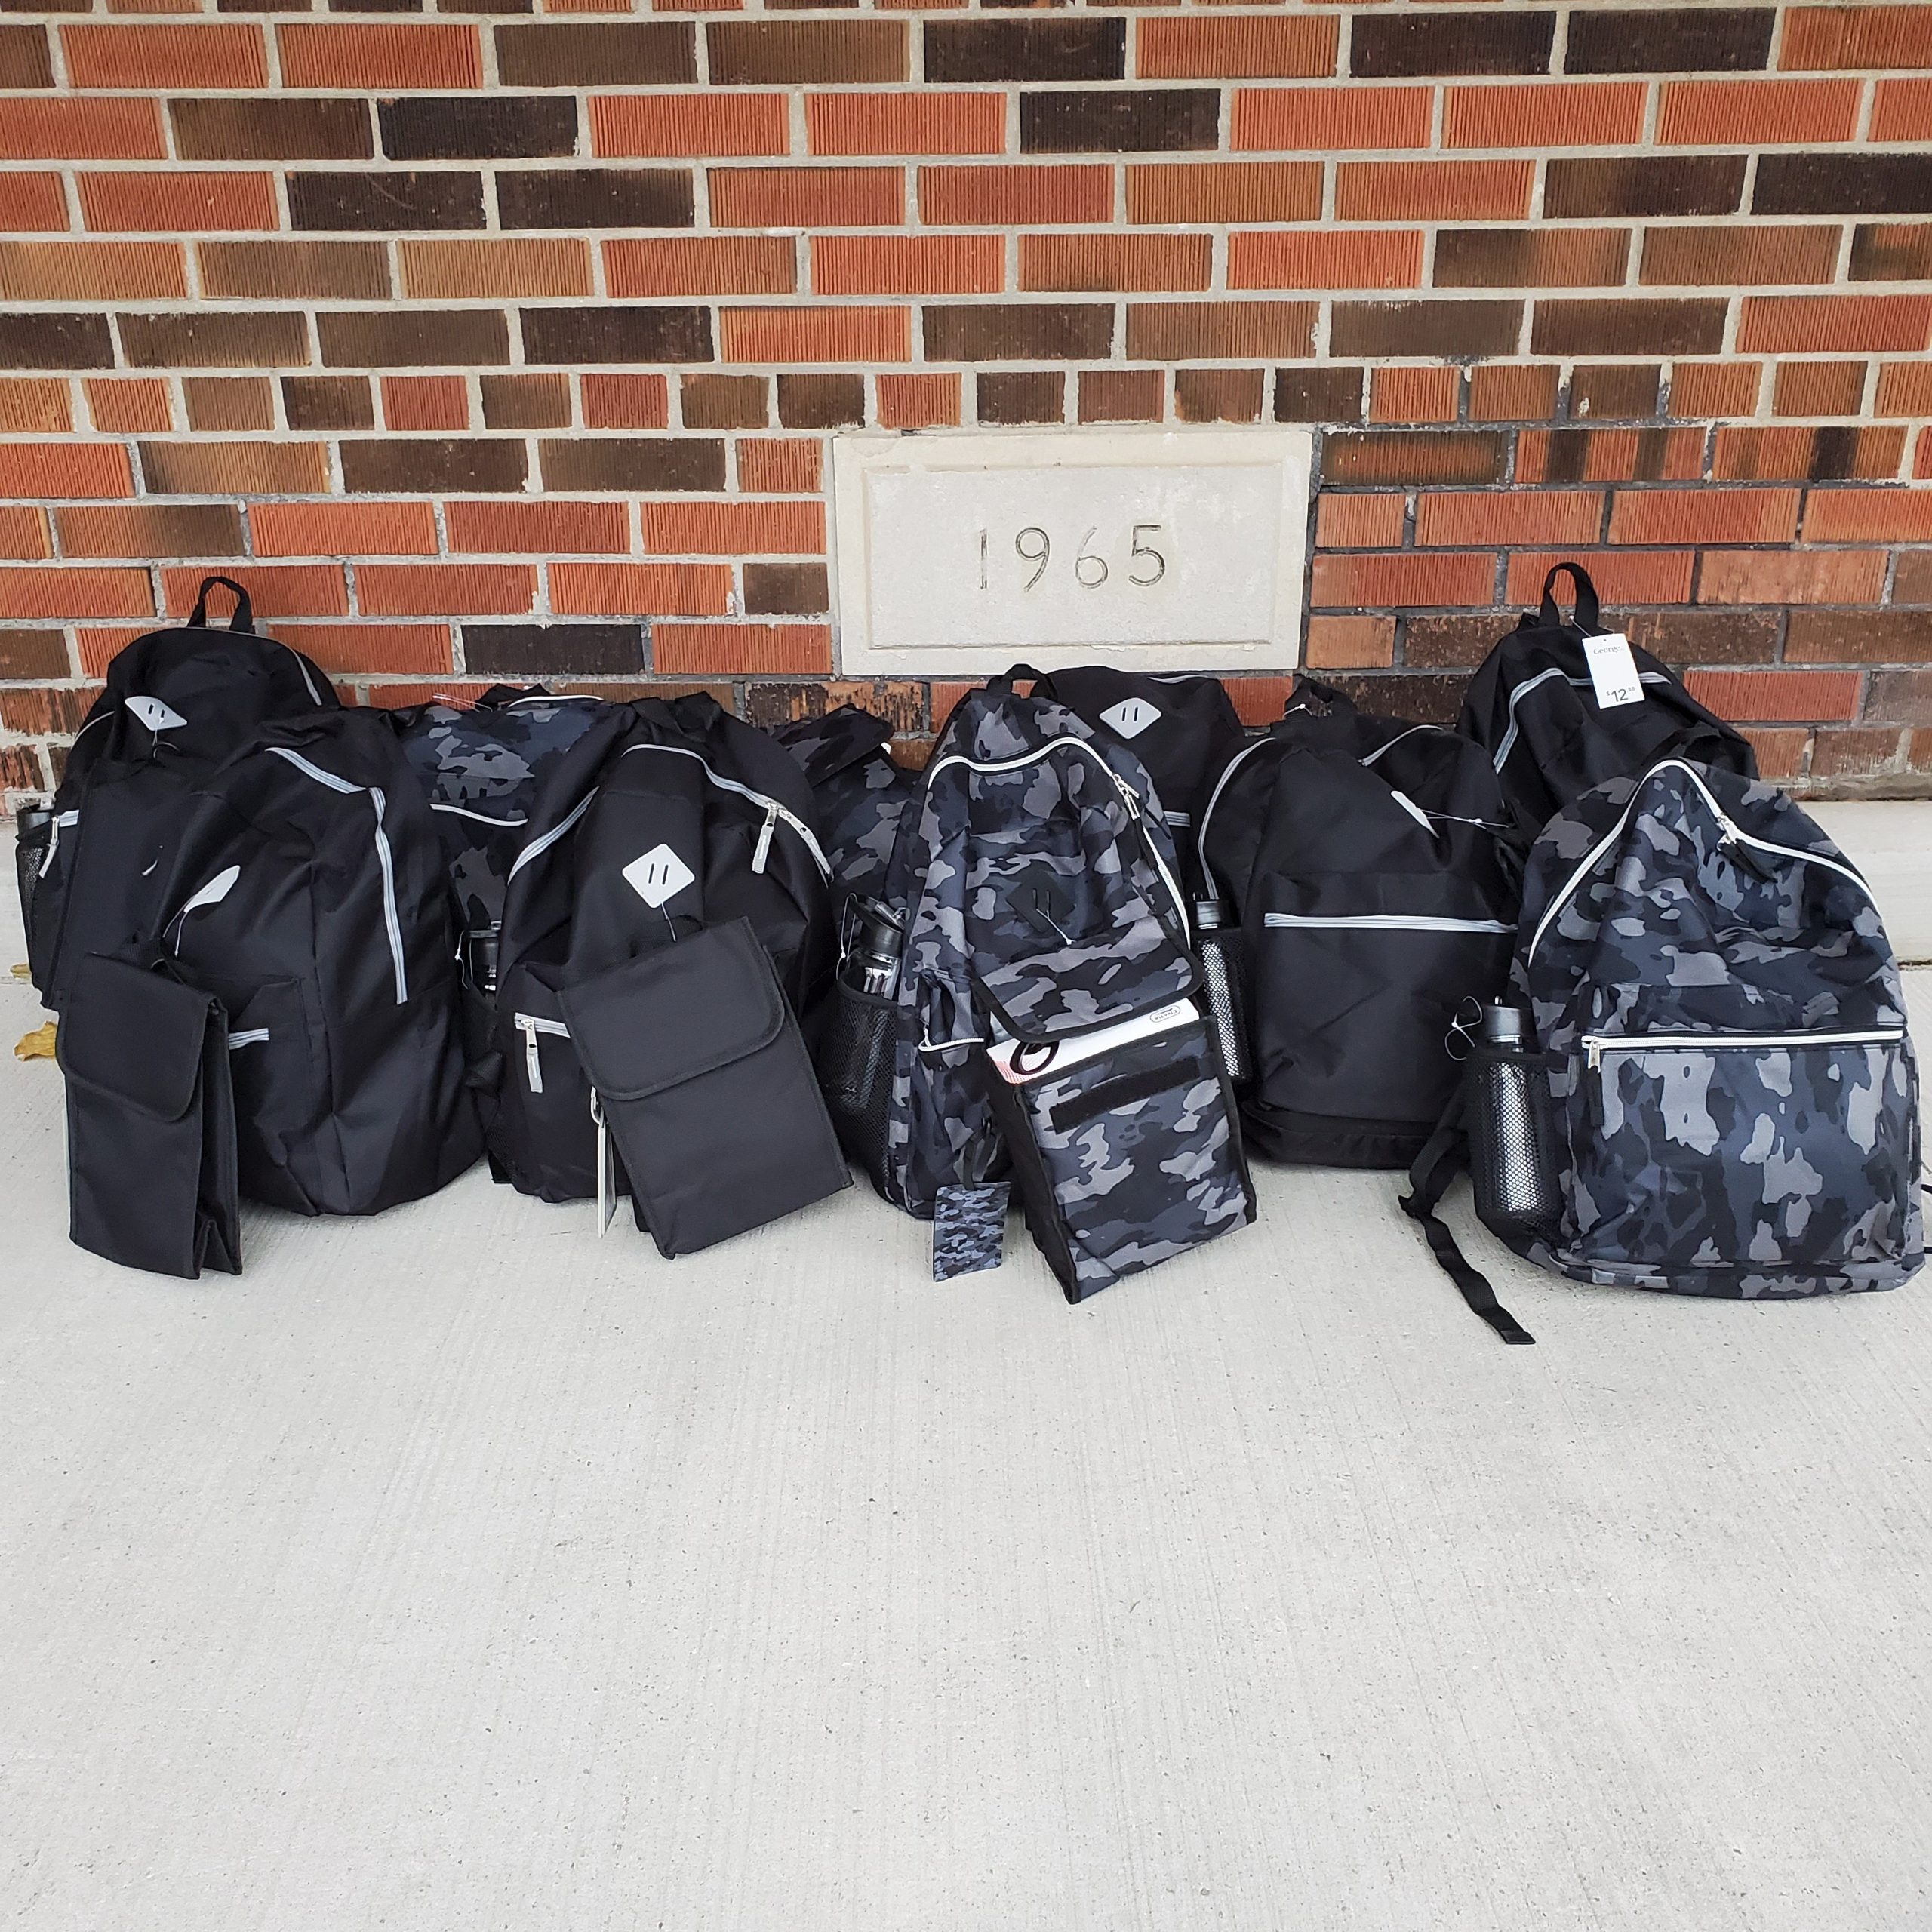 Photo of backpacks